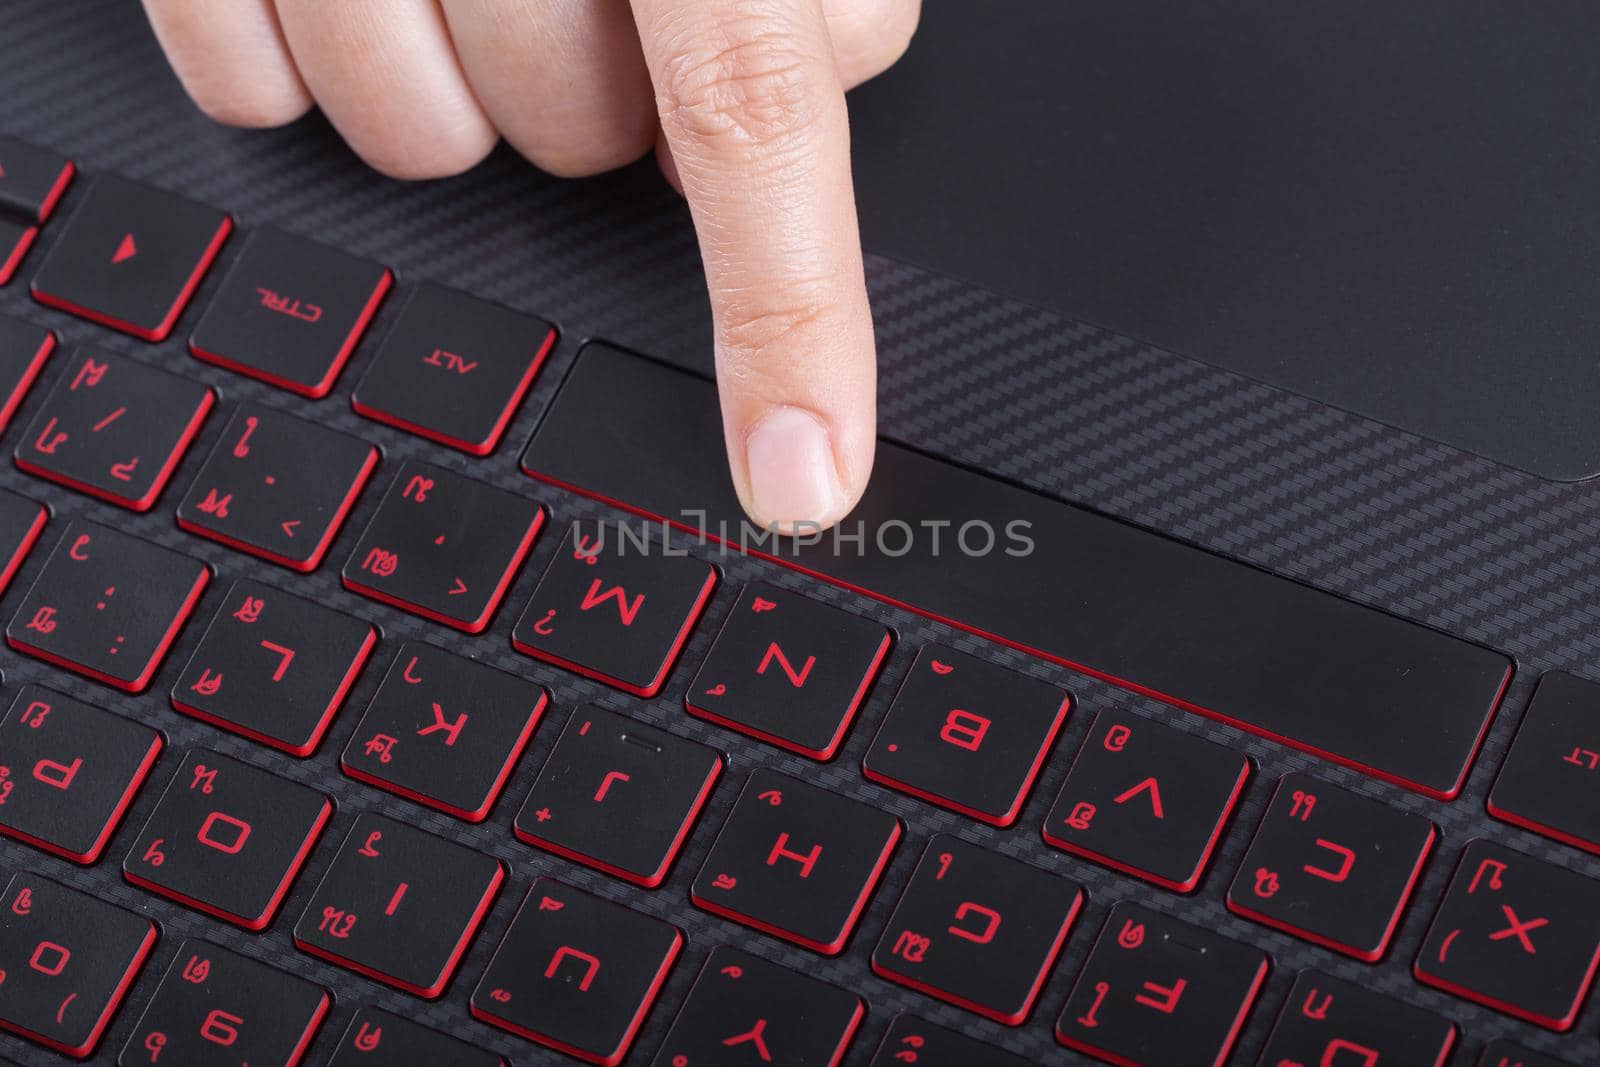 finger pushing space bar button on laptop keyboard by geargodz